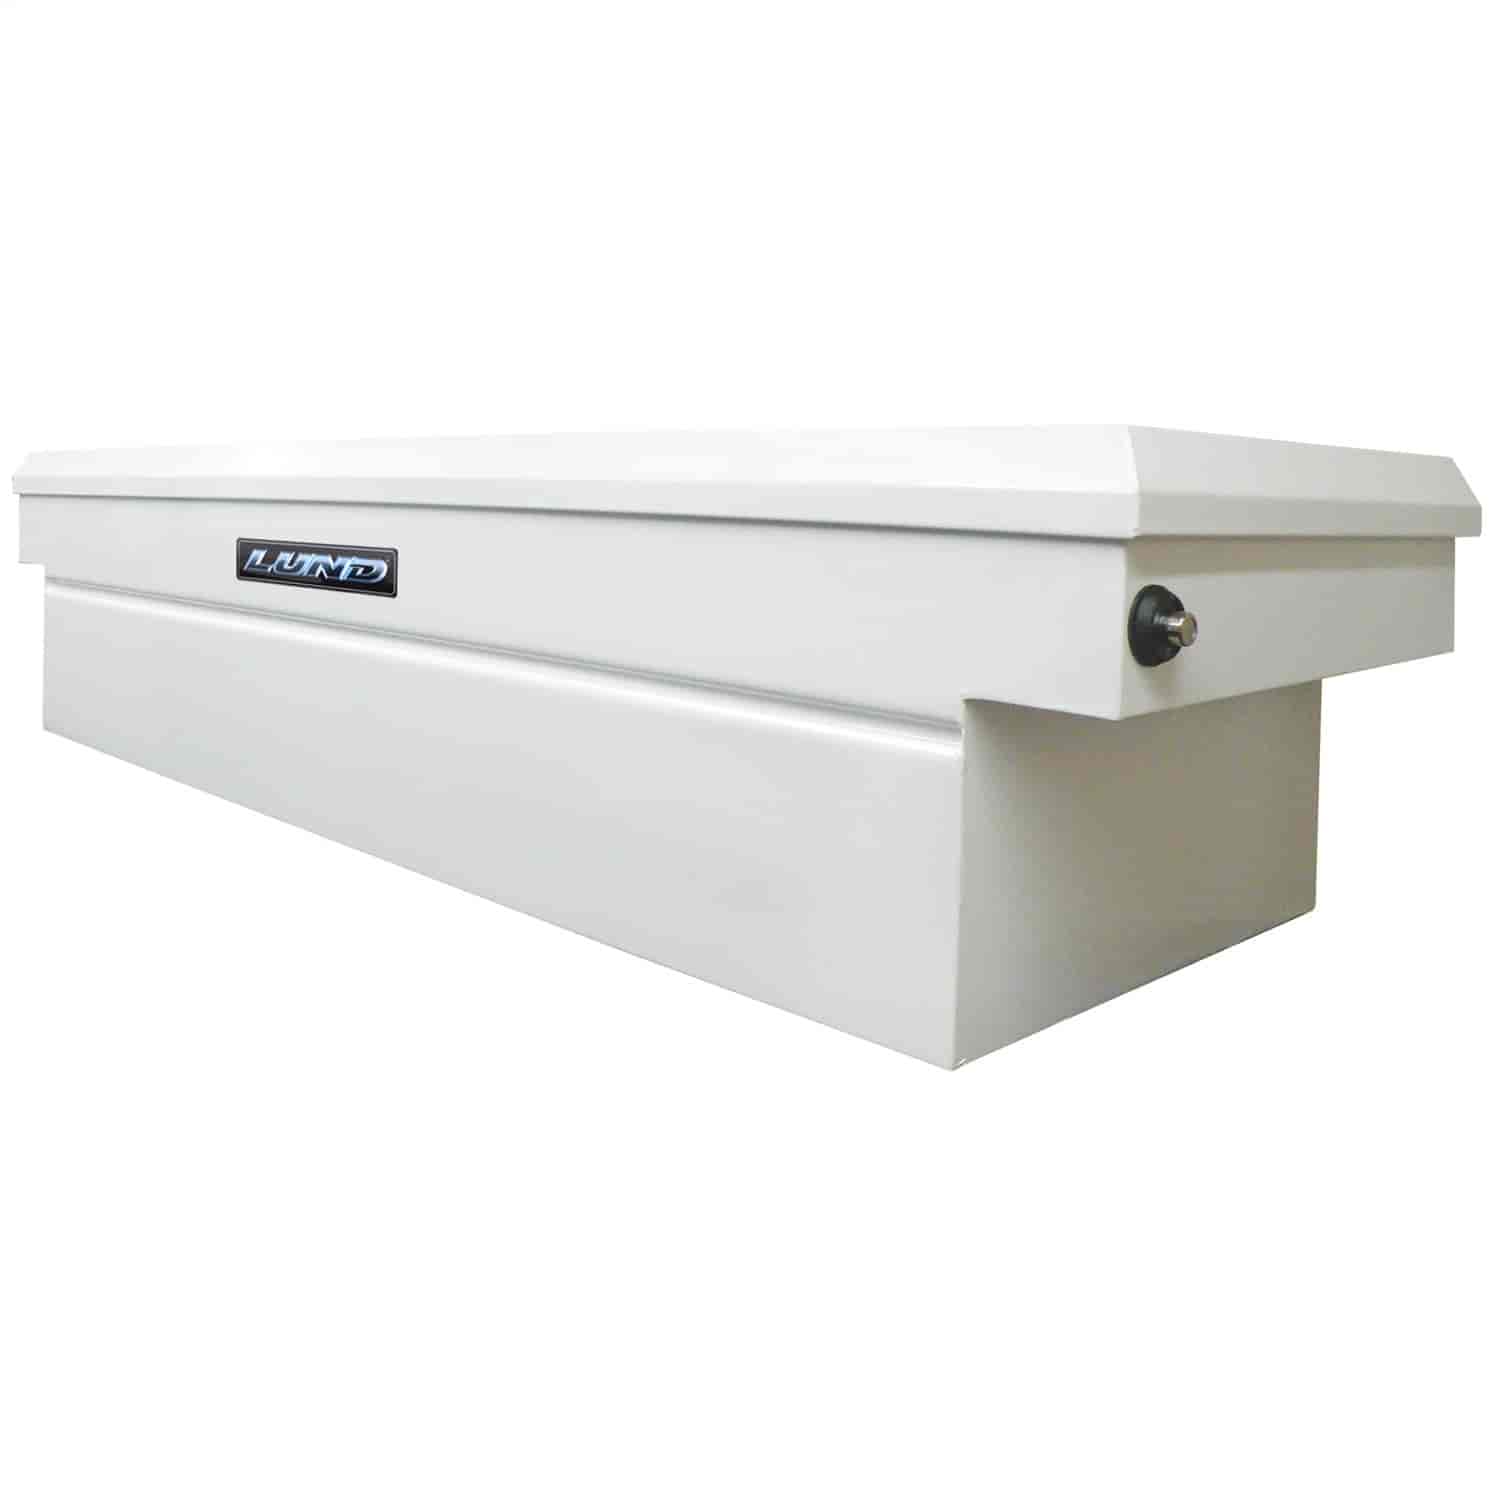 PRO HD Steel Bed Rail Tool Box Length: